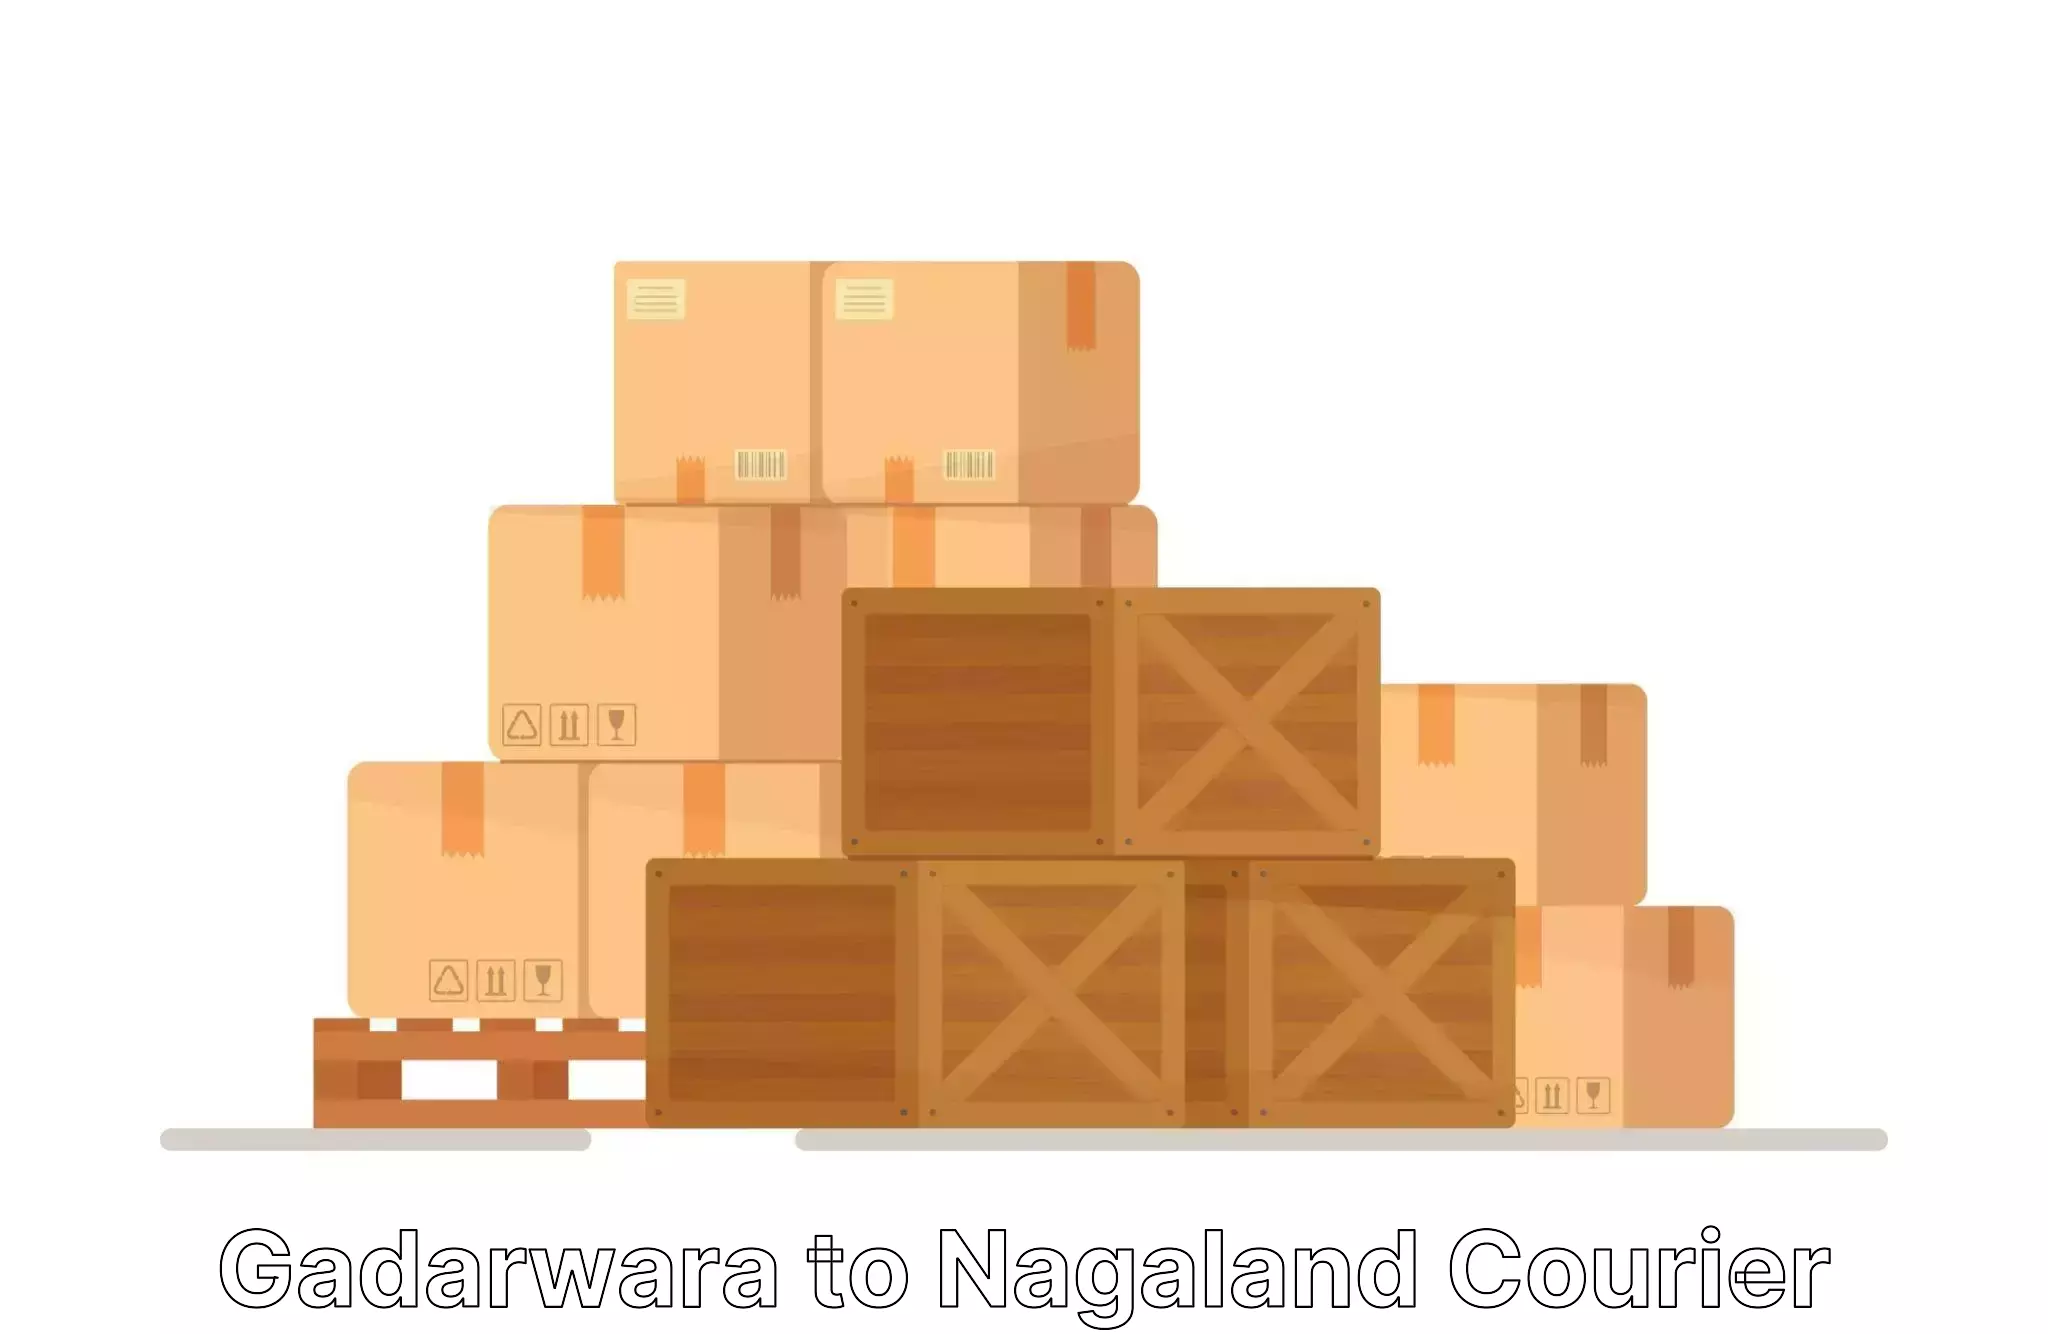 Residential moving experts Gadarwara to Nagaland